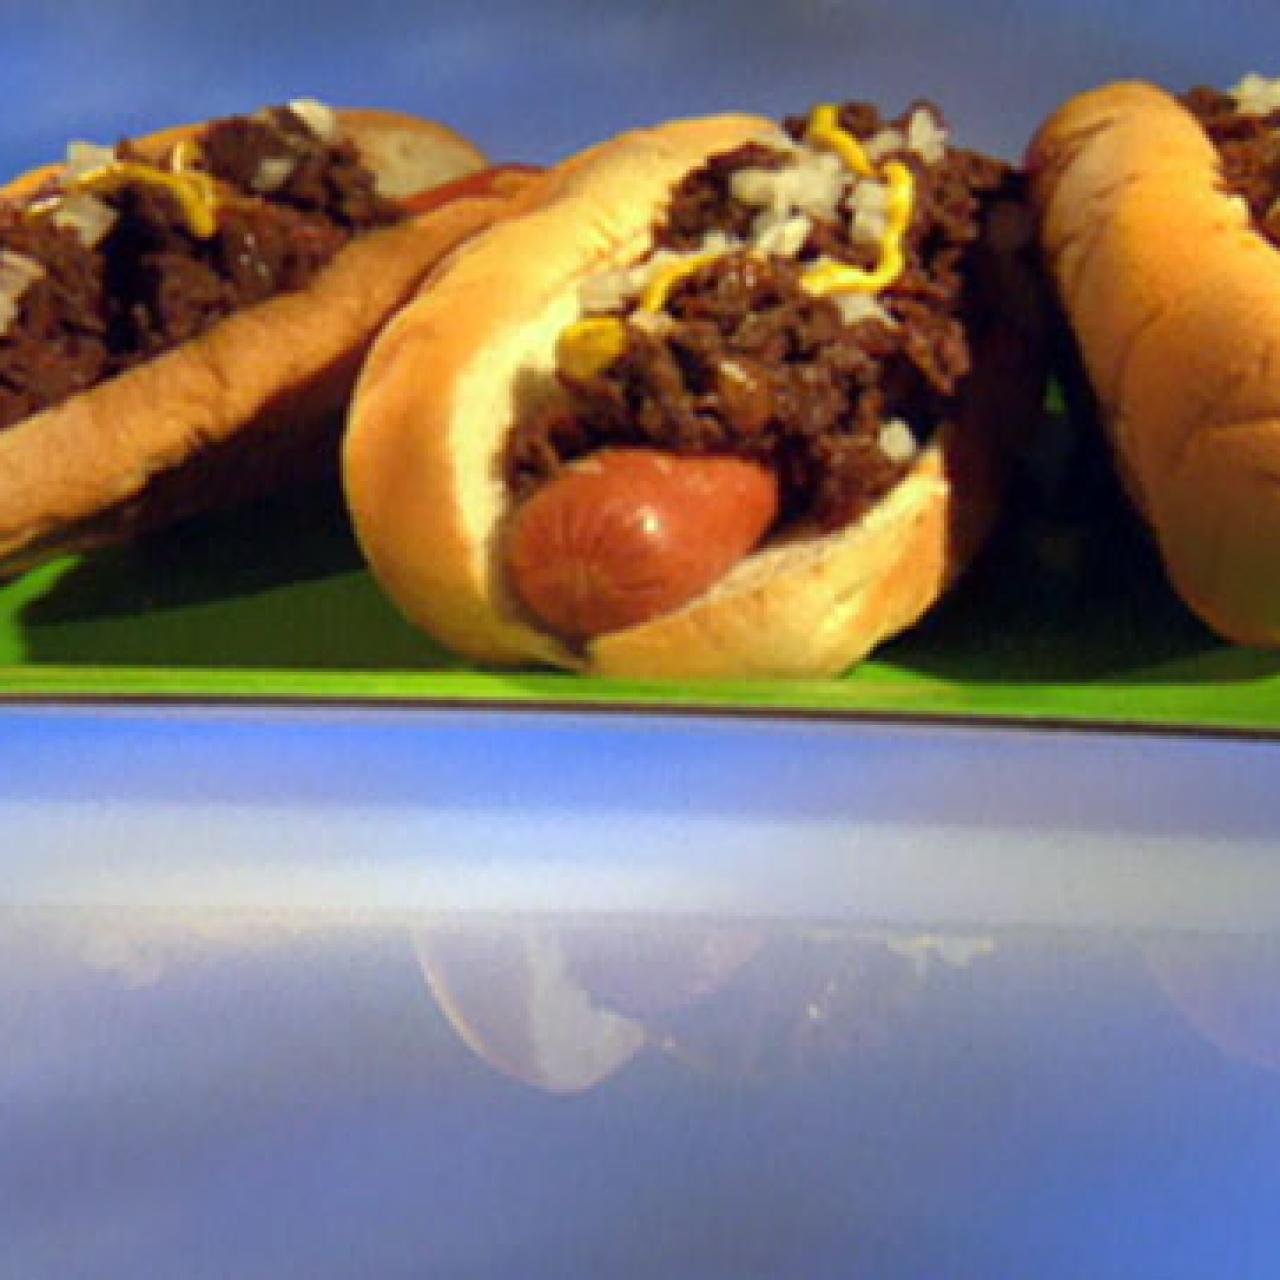 wiener dogs in hot dog buns